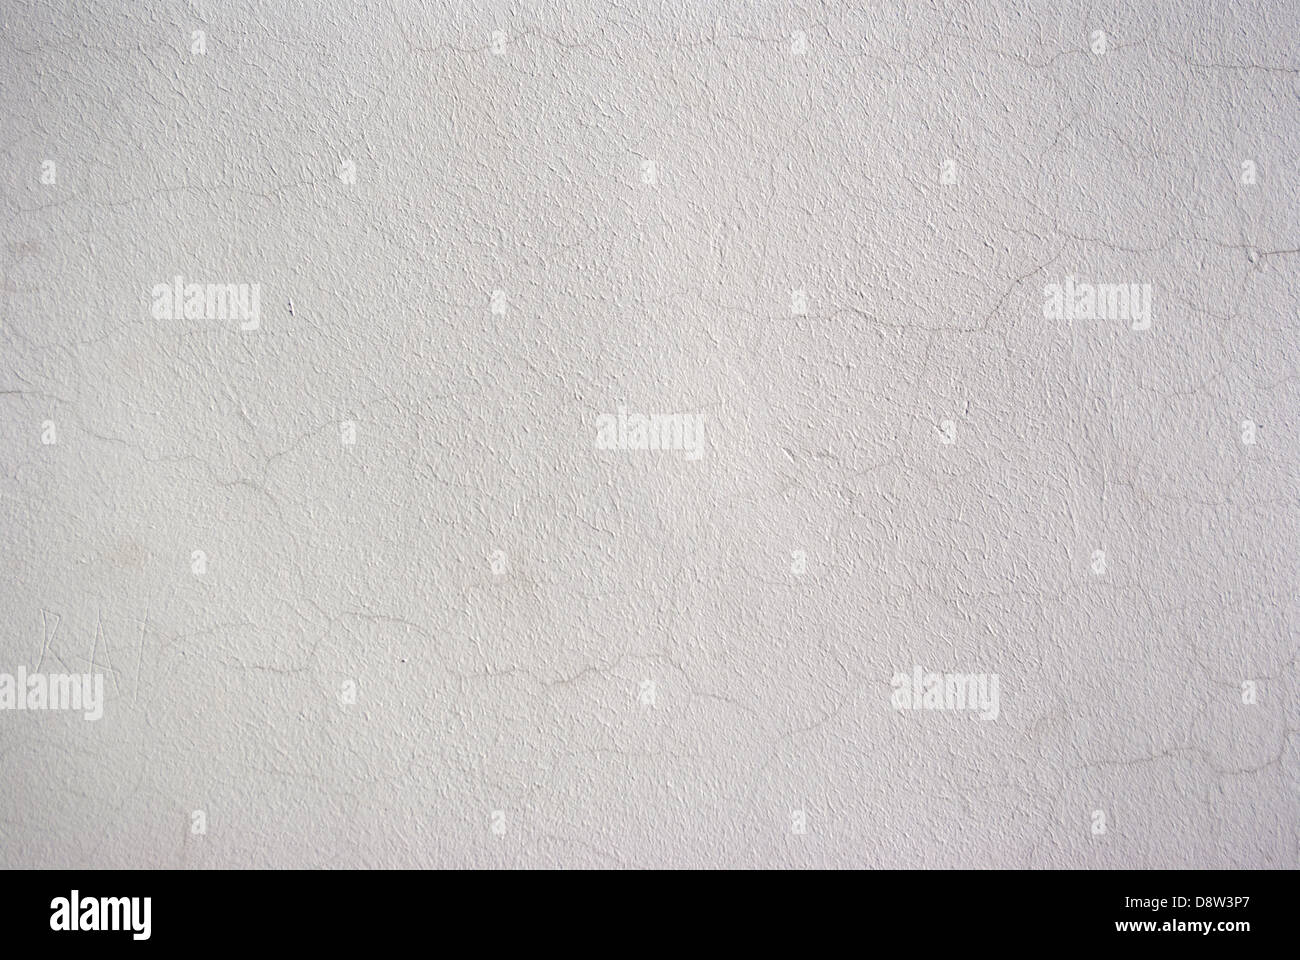 Texture concrete wall Stock Photo - Alamy